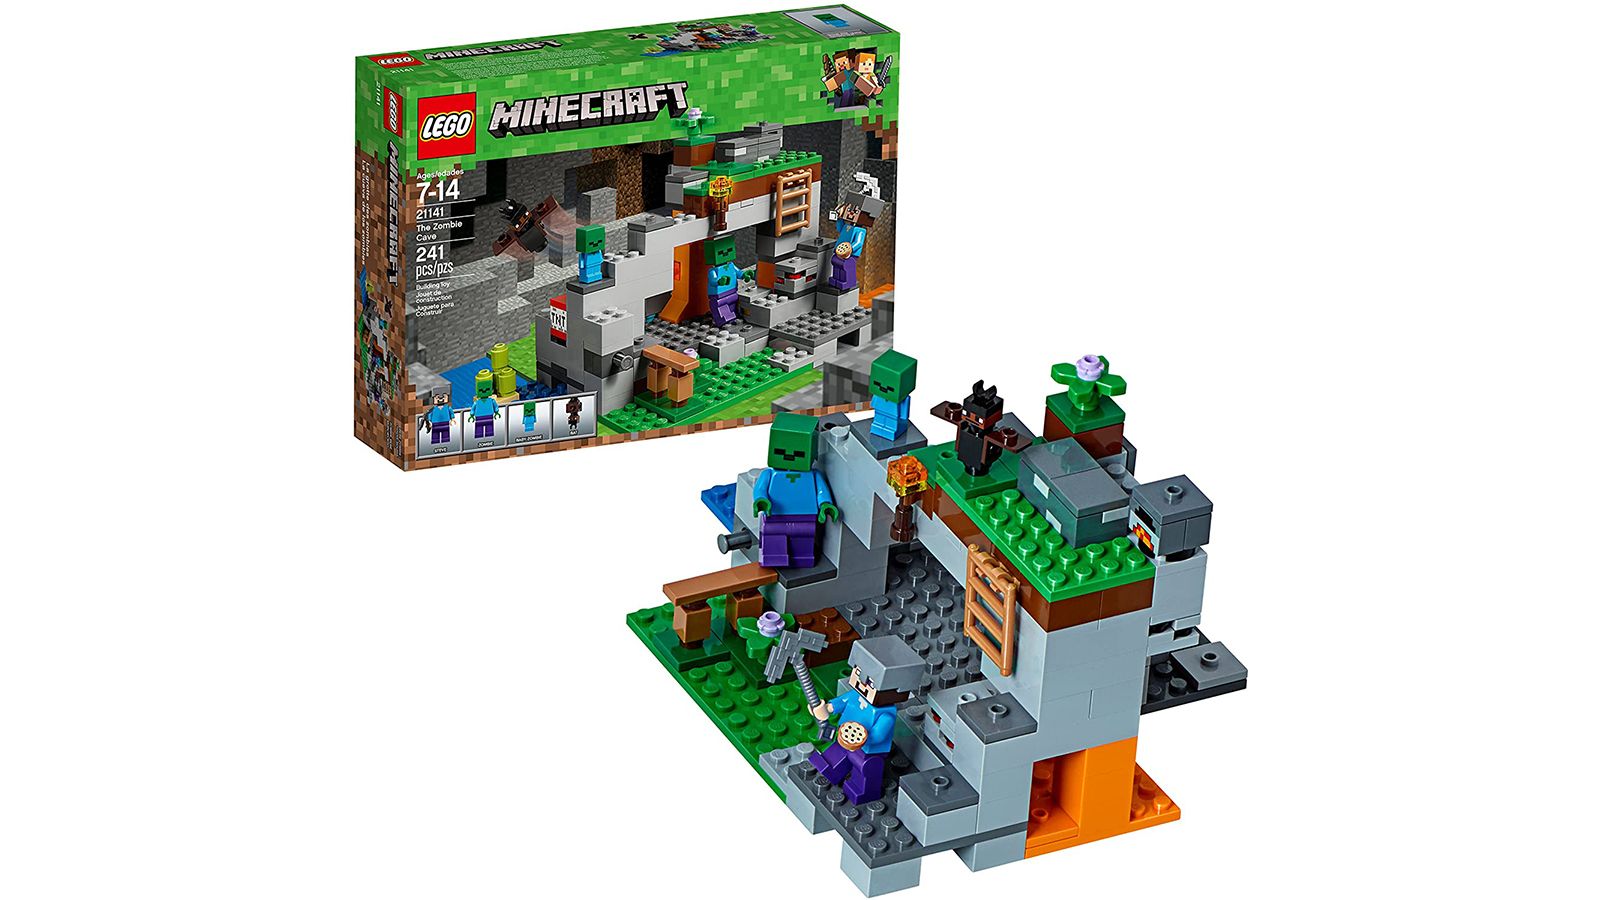 LEGO Minecraft The Zombie Cave